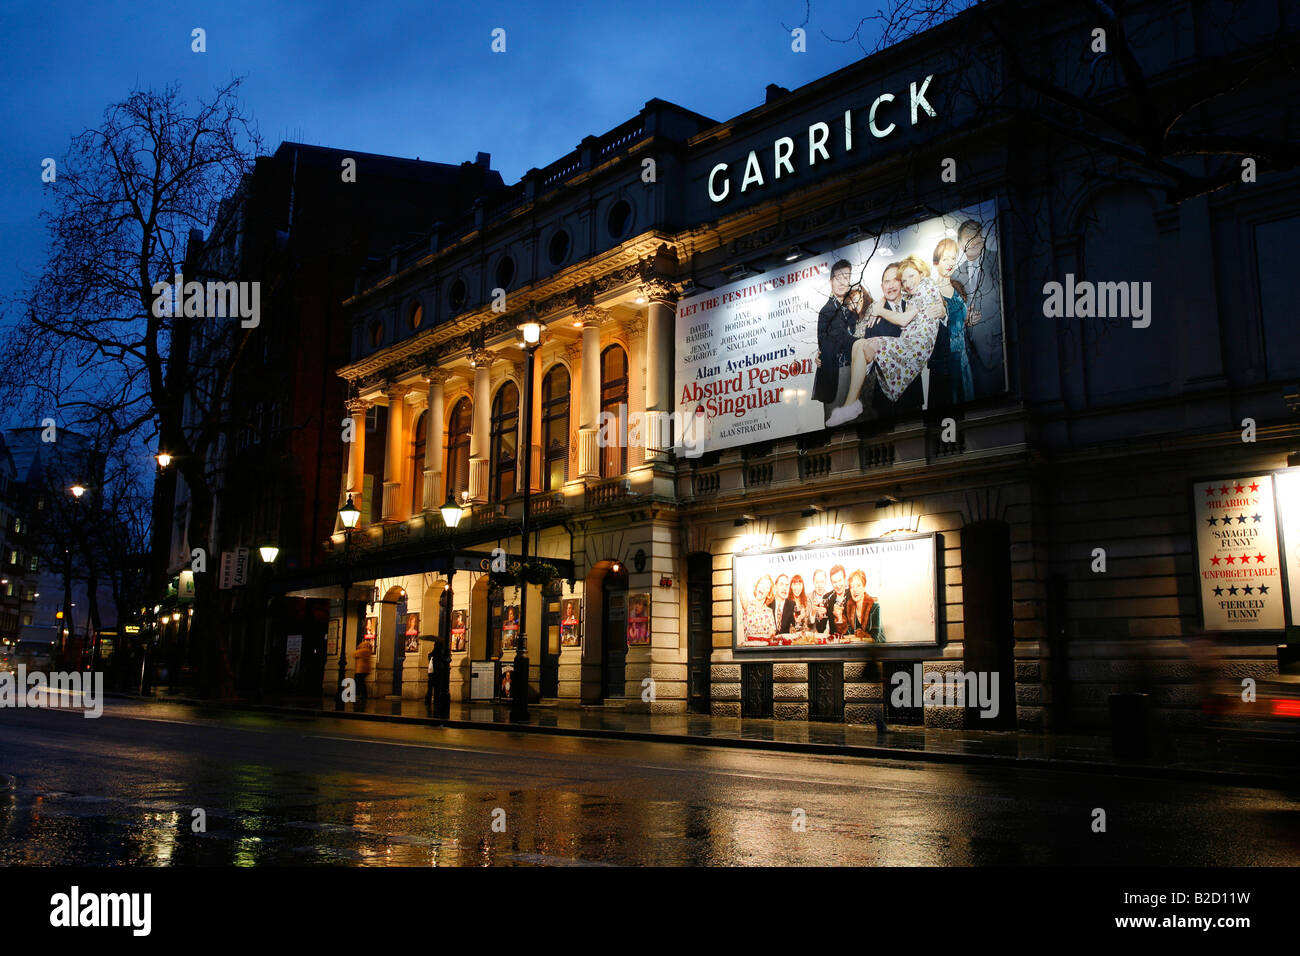 Garrick Theatre on Charing Cross Road, Covent Garden, London Stock Photo